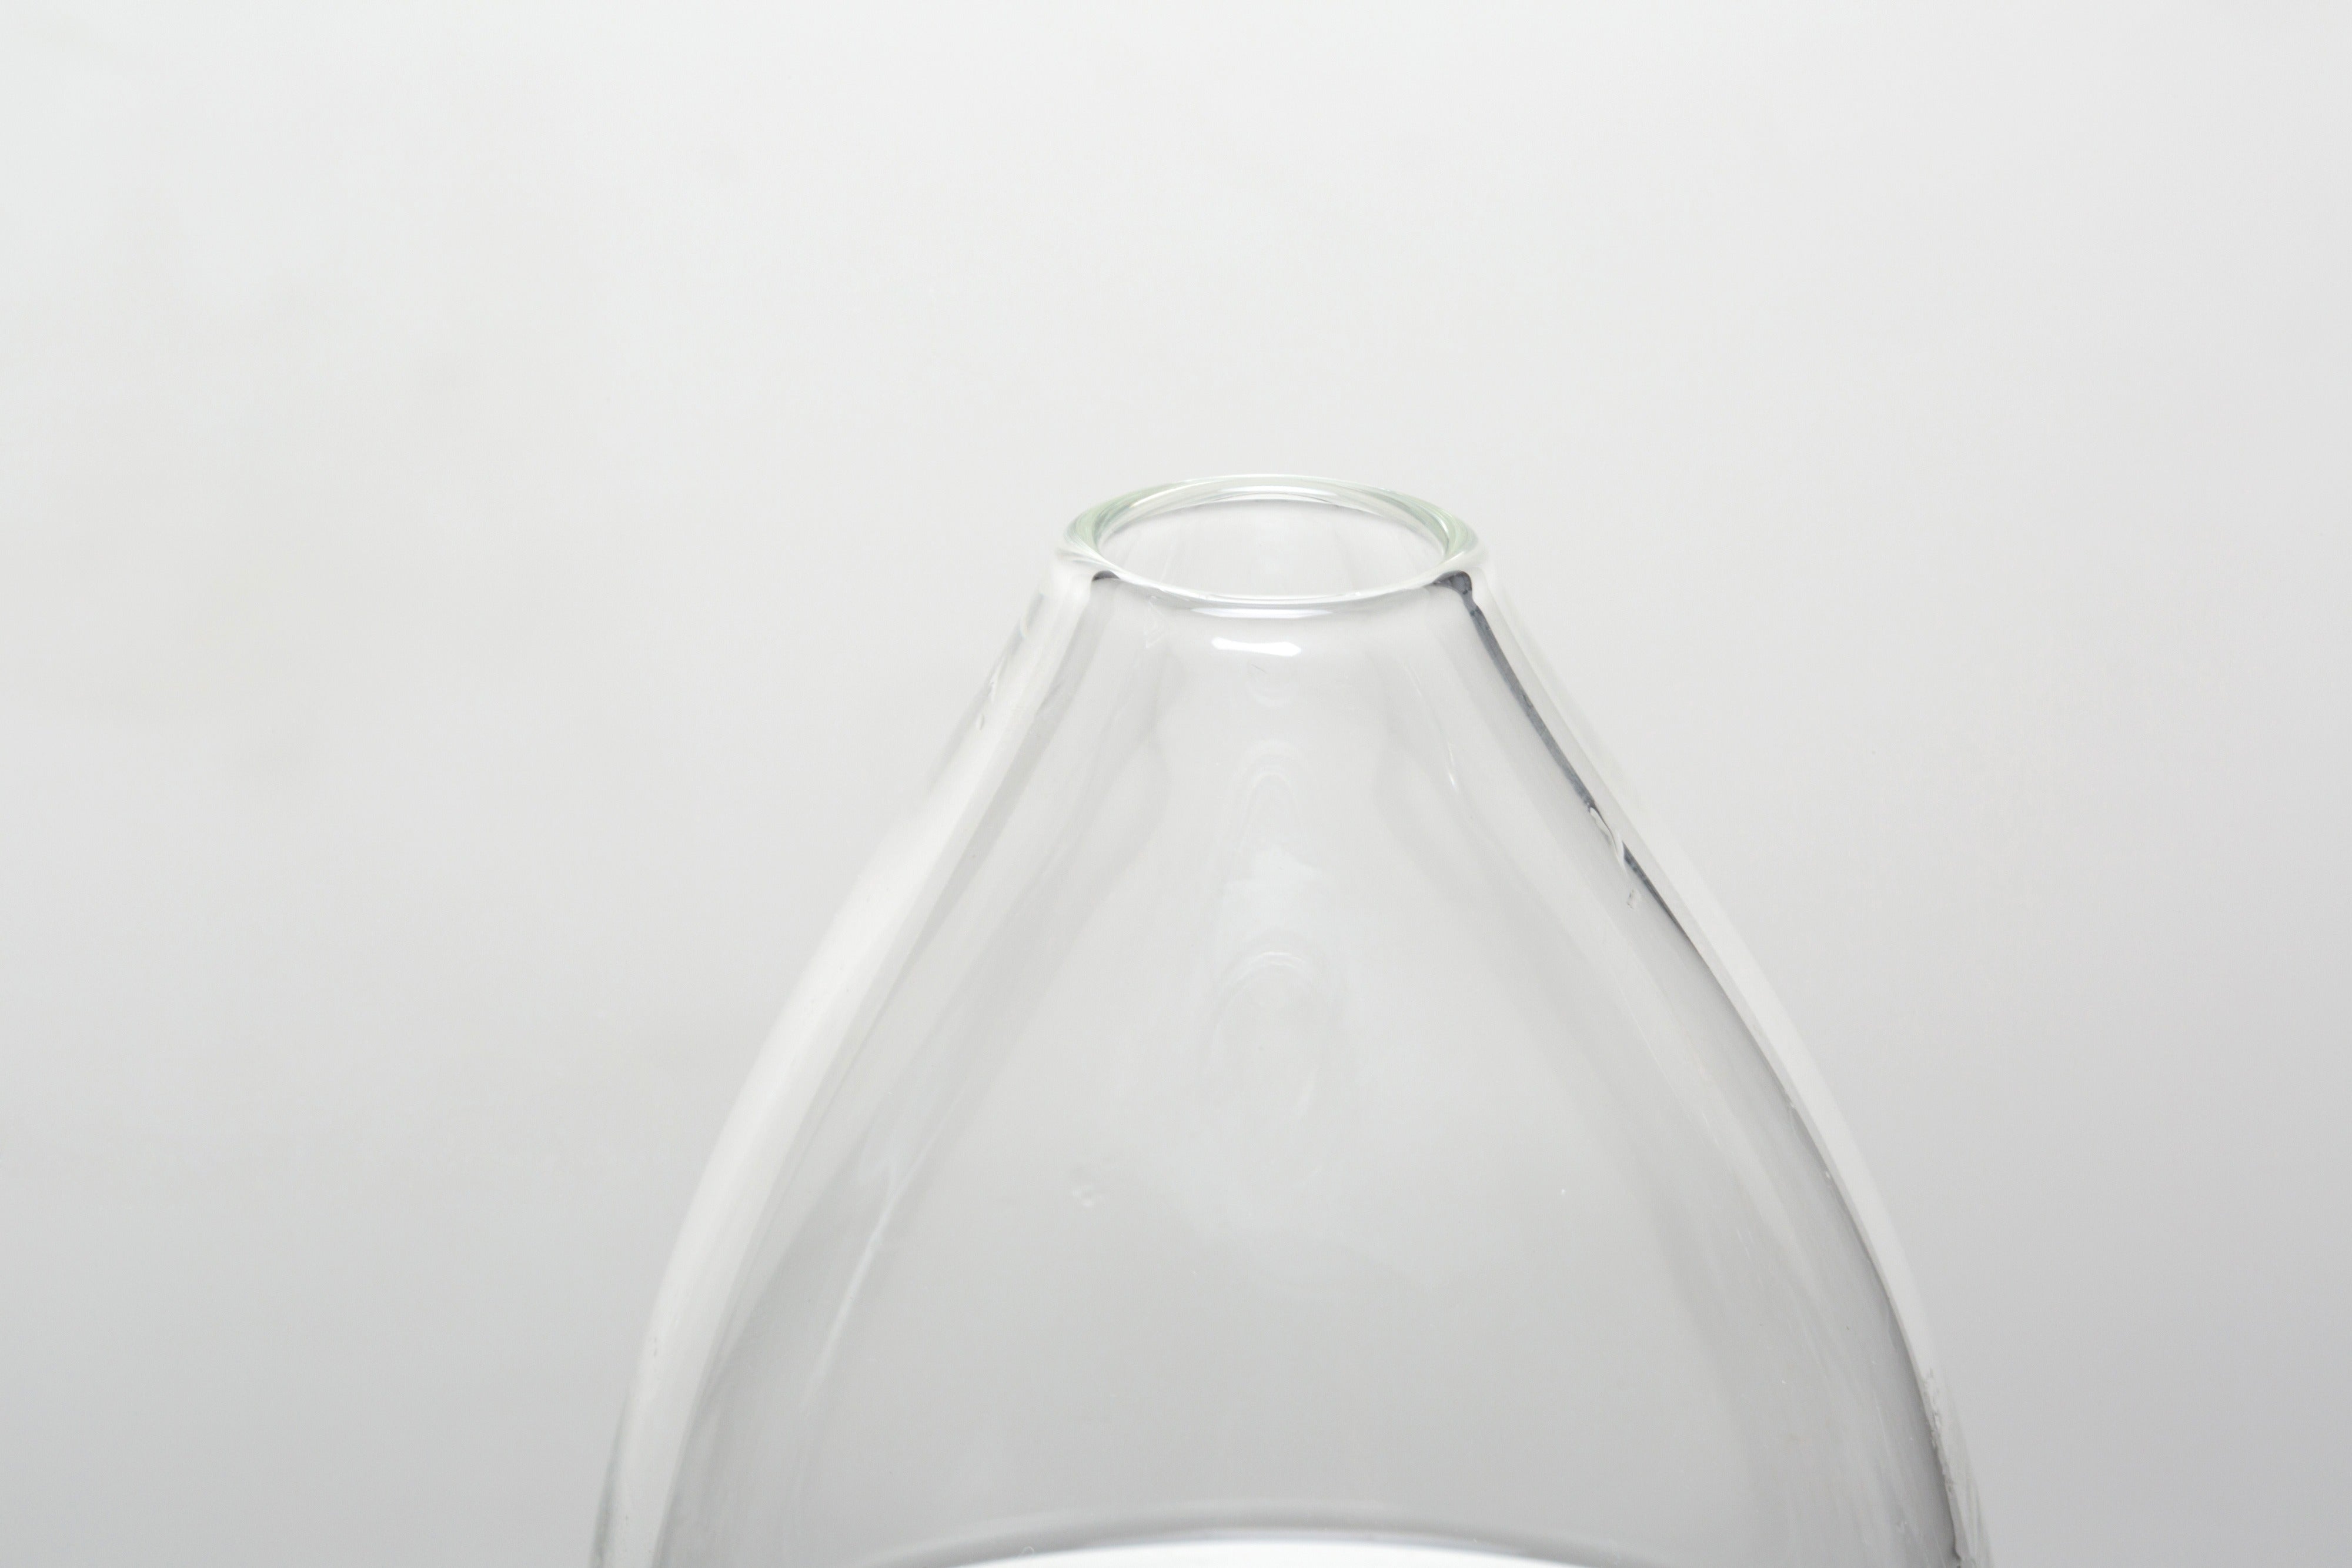 Handmade Clear Glass Vase In A Flower Bud Shape